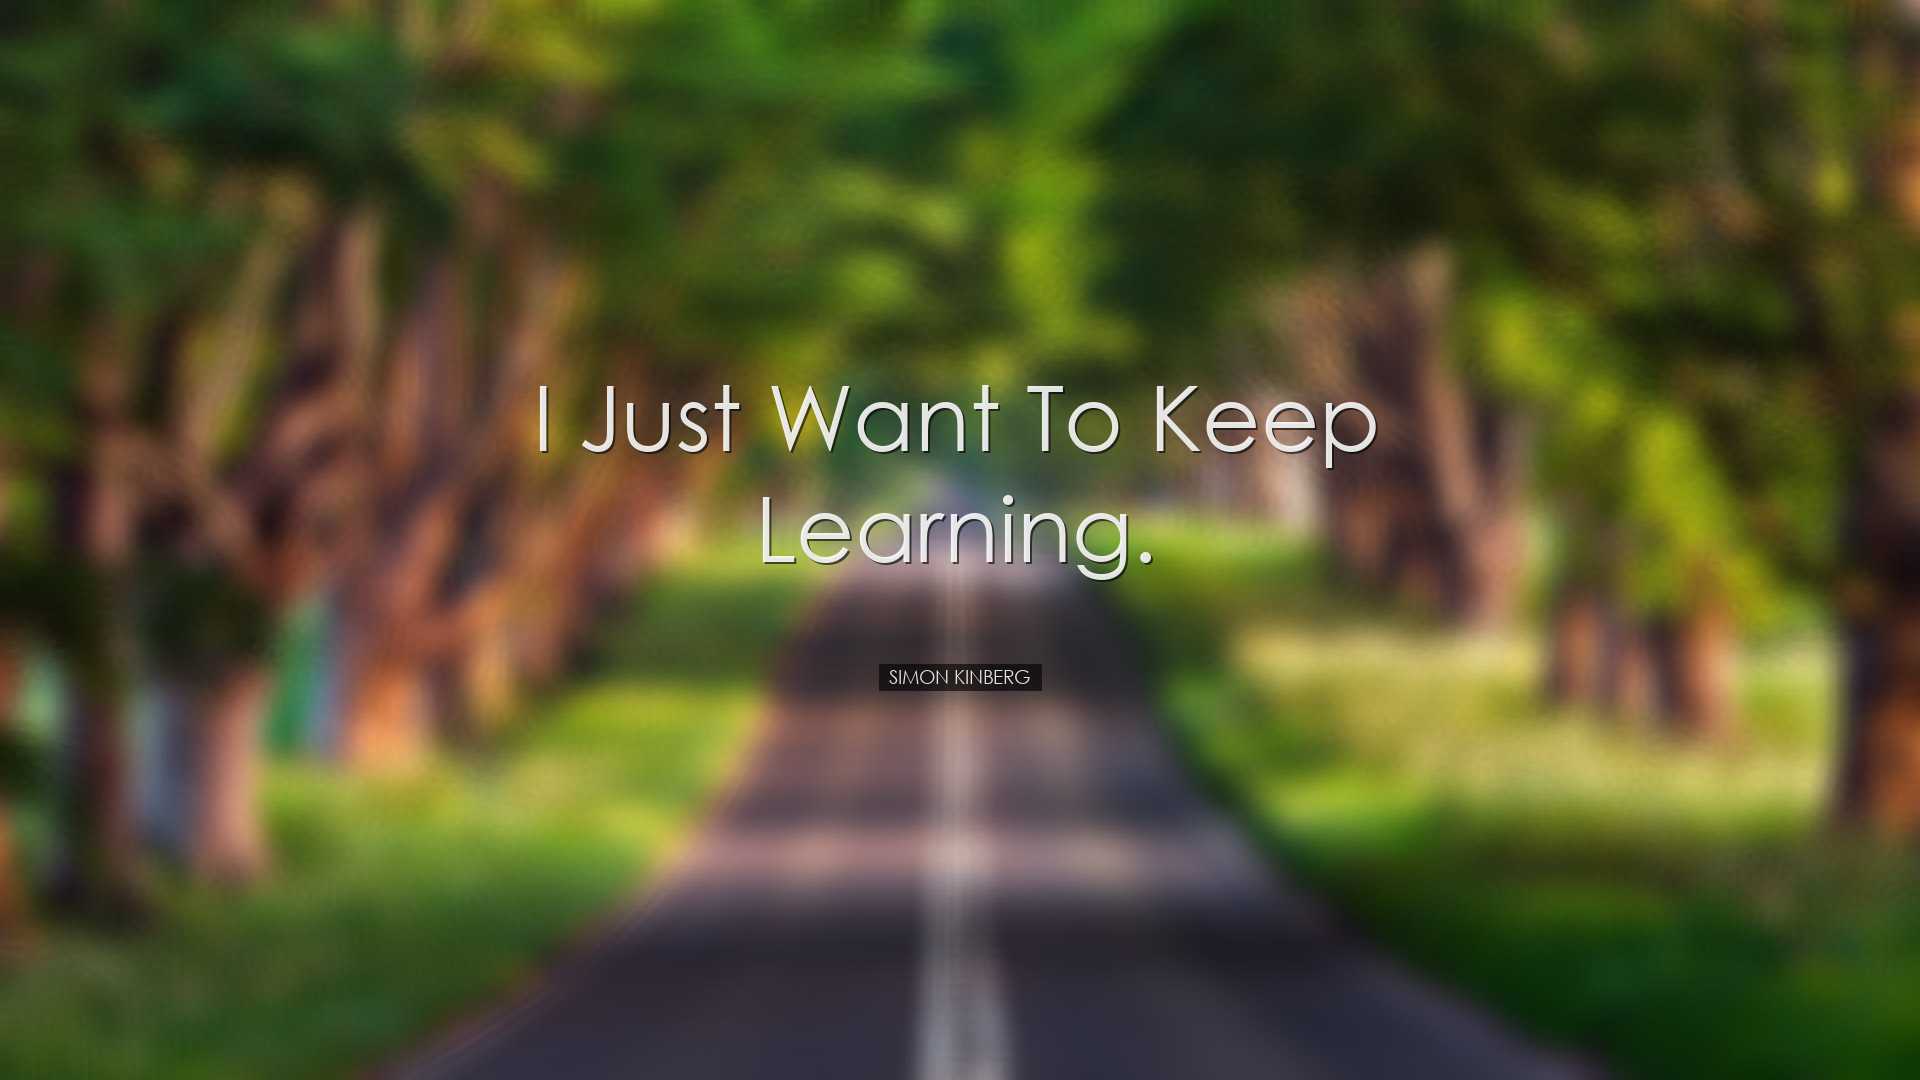 I just want to keep learning. - Simon Kinberg